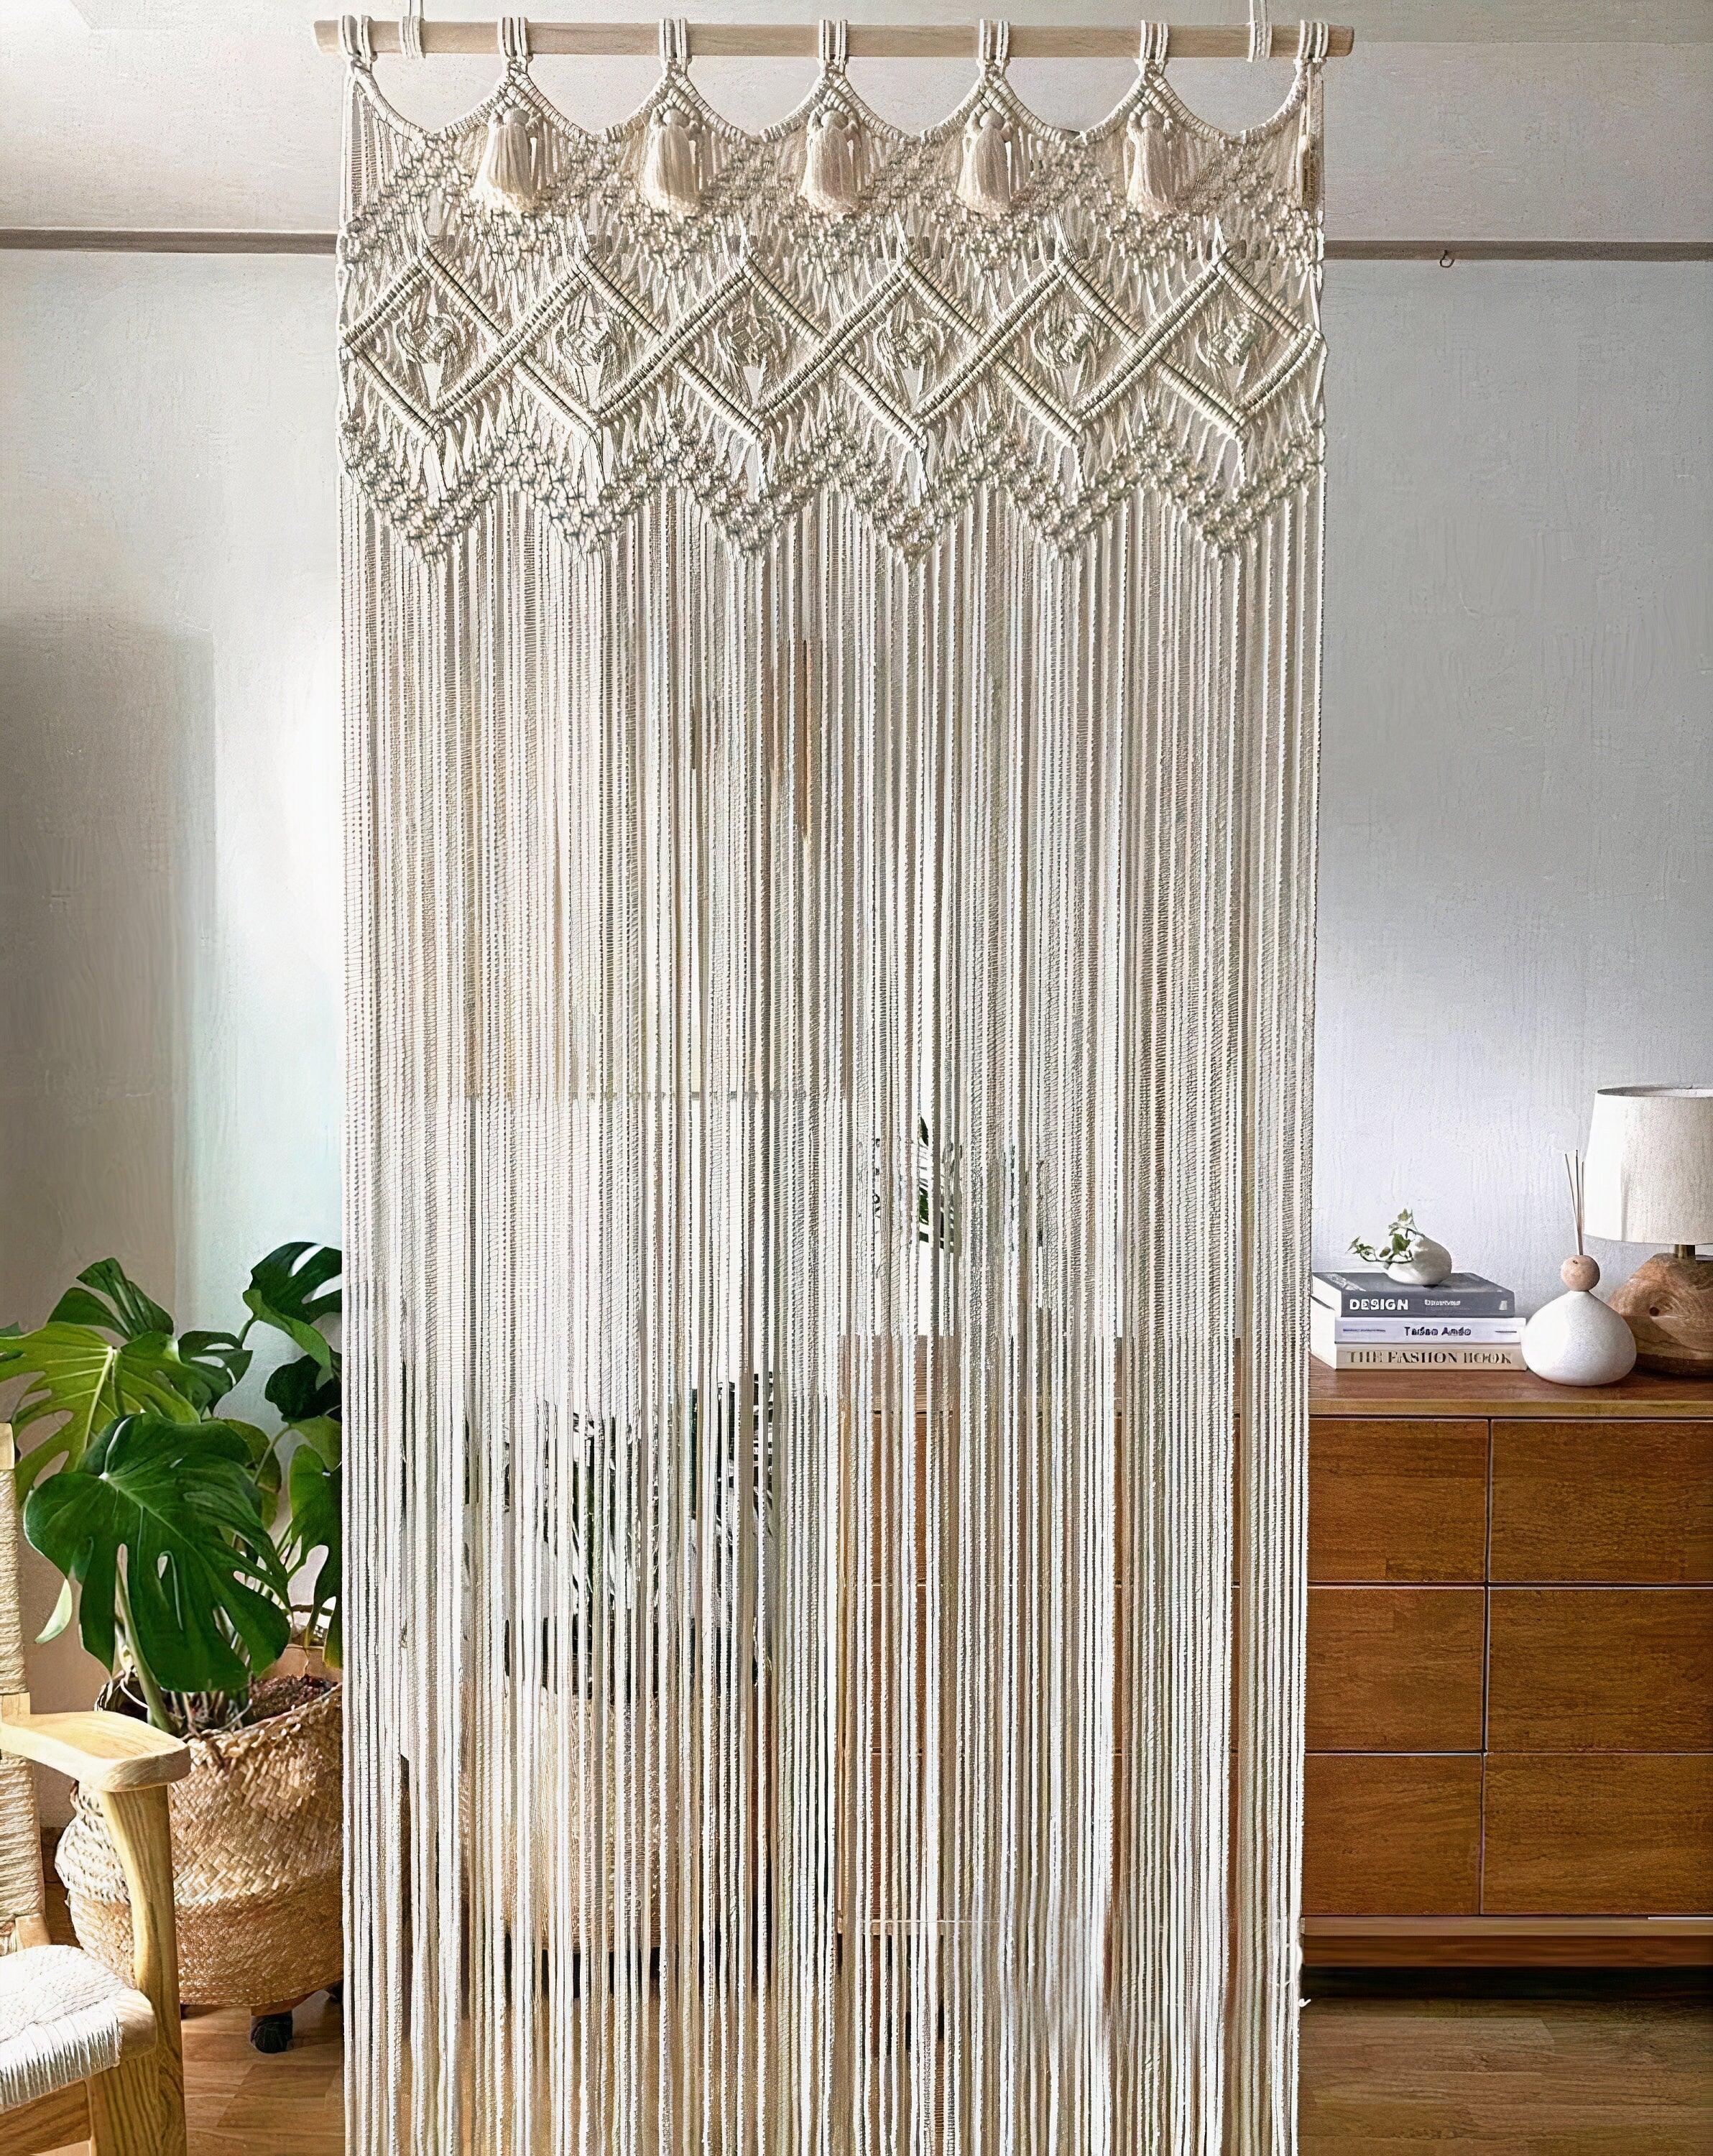 Tranquil Textile Curtains -  Macrame Curtains